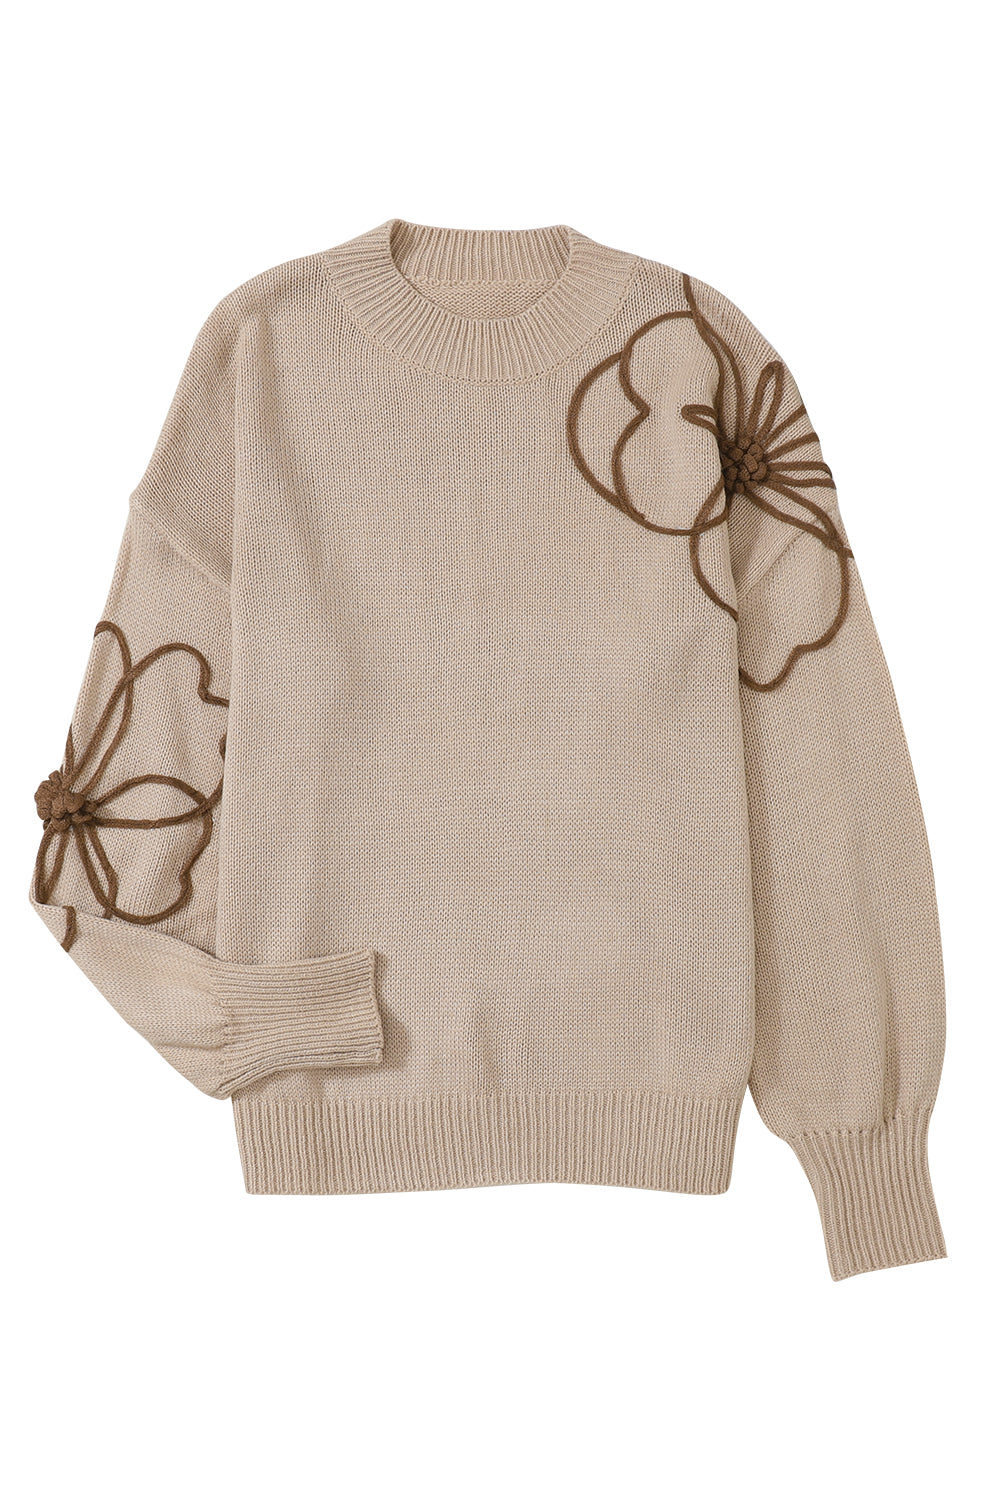 Khaki Floral Decor Lantern Sleeve Knit Sweater